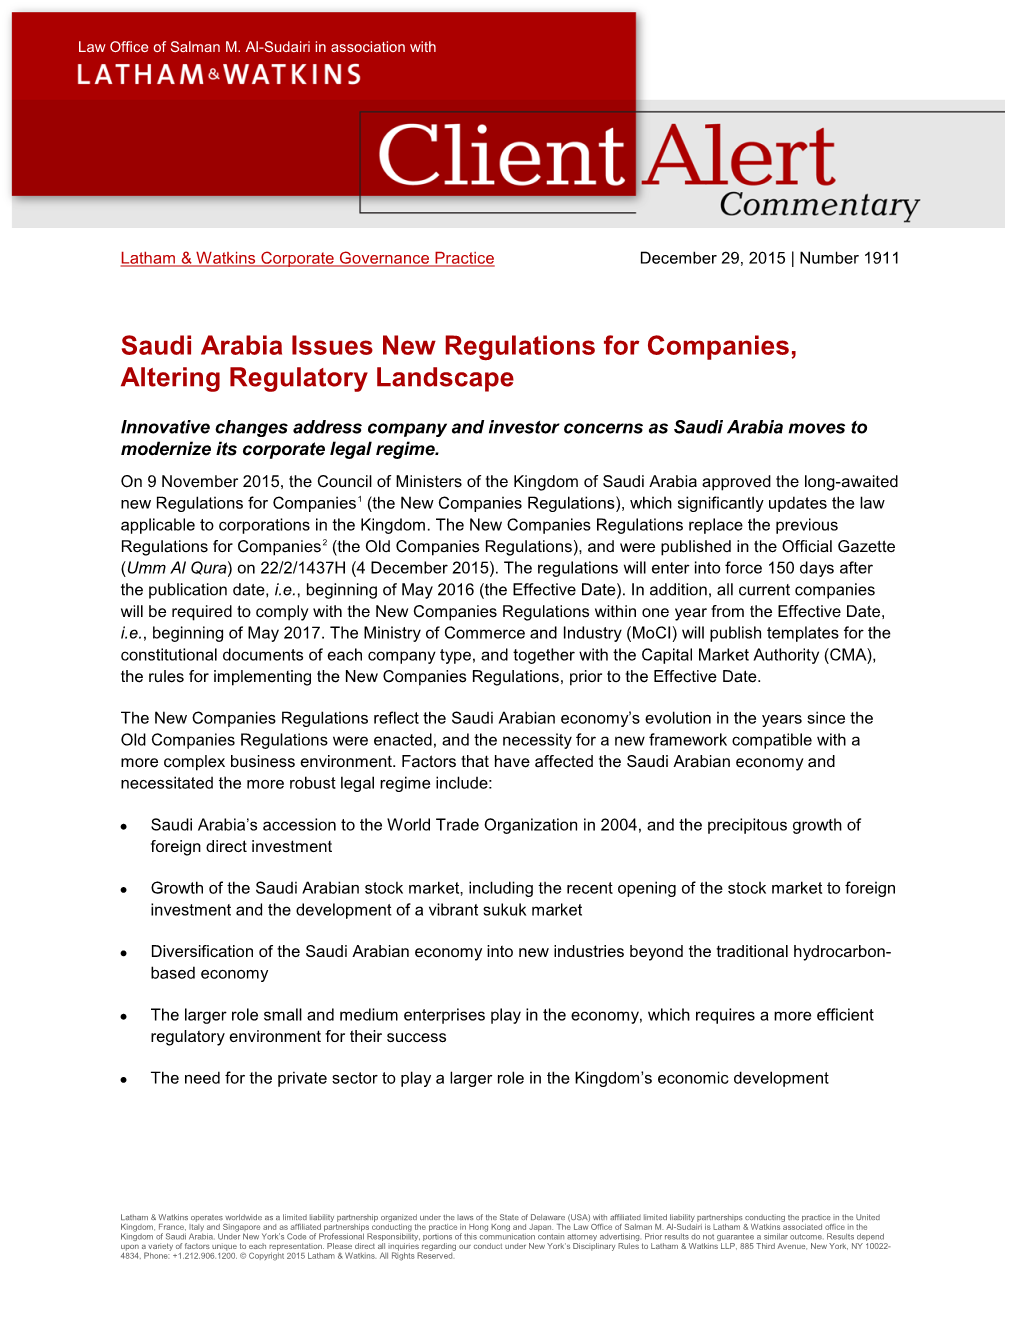 Saudi Arabia Issues New Regulations for Companies, Altering Regulatory Landscape